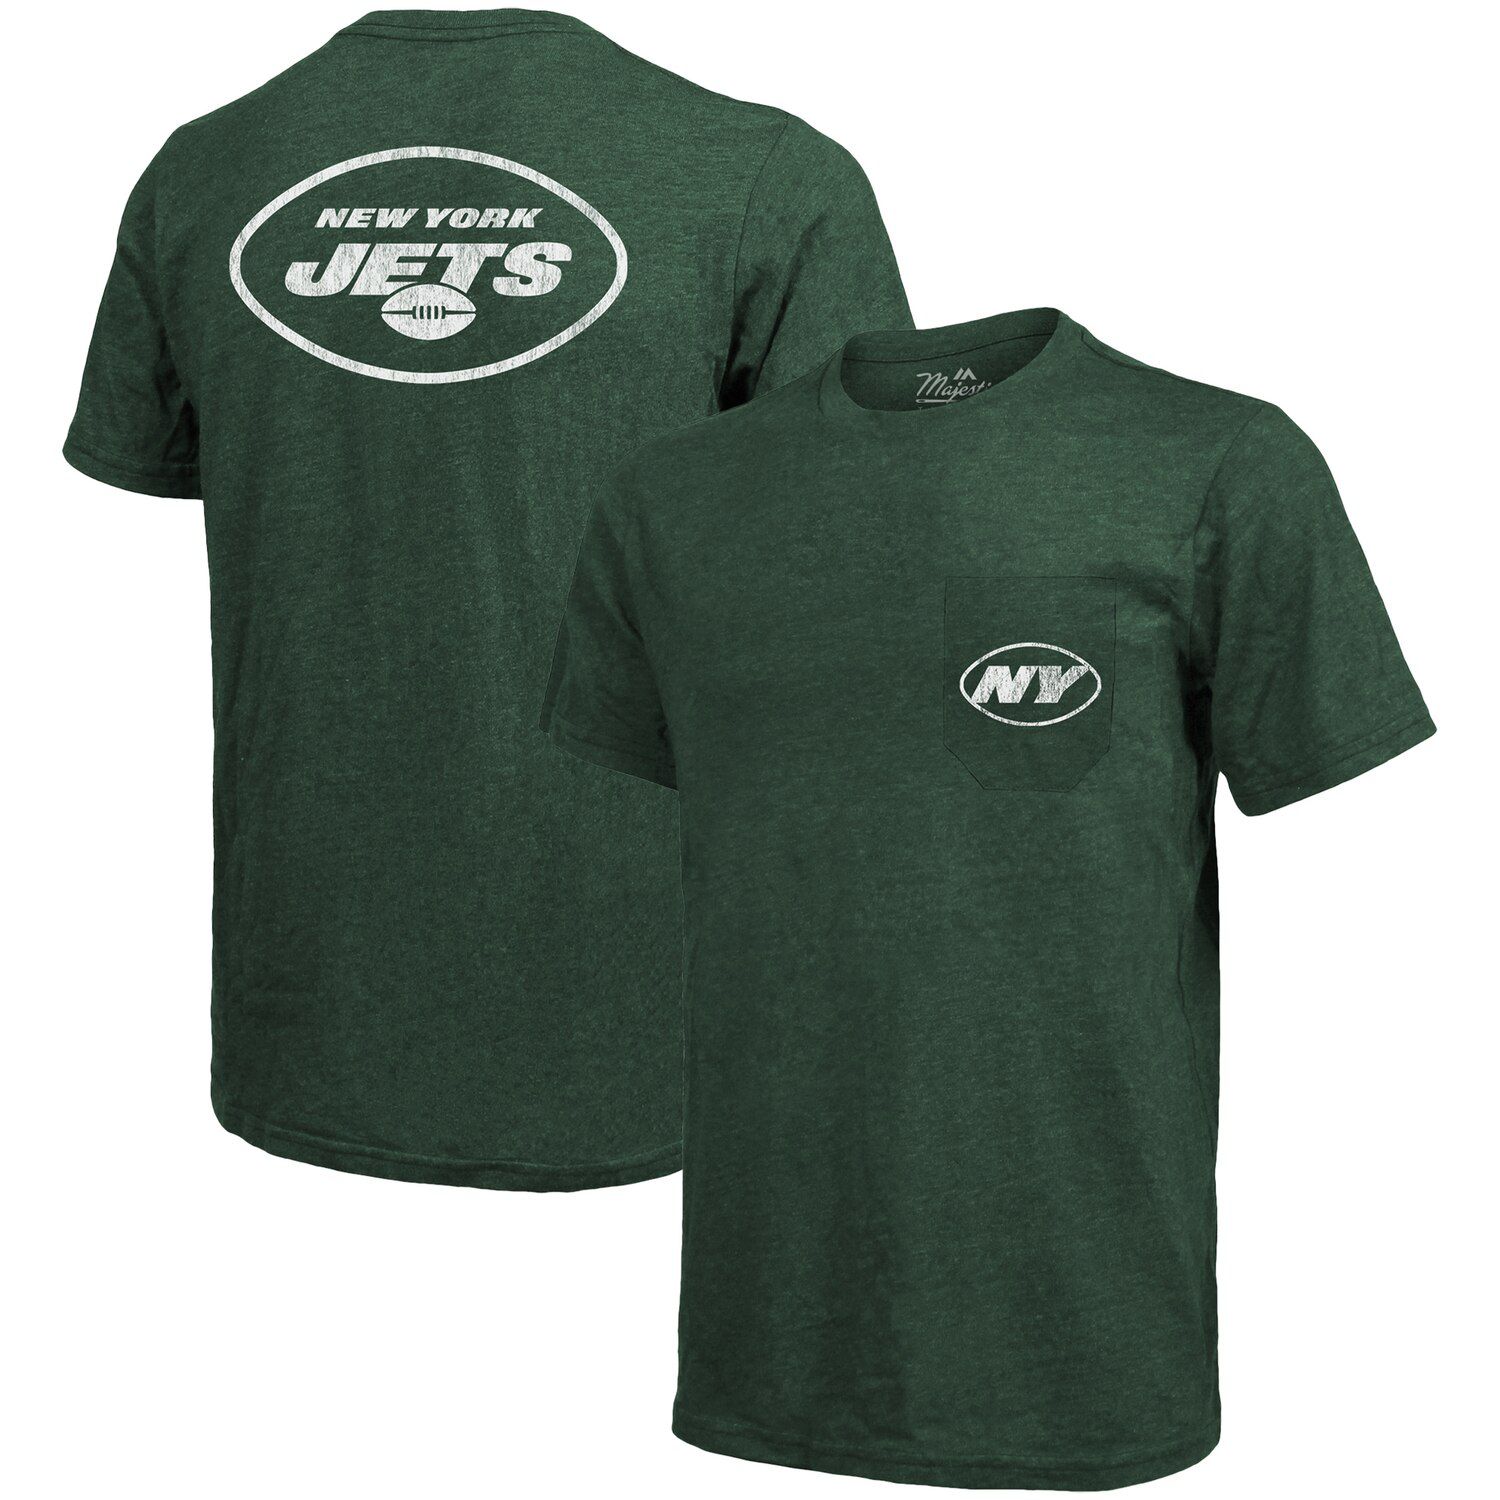 Футболка с карманами Tri-Blend New York Jets Threads — меланжево-зеленый Majestic футболка new england patriots threads с карманами tri blend темно синий с меланжевым отливом majestic